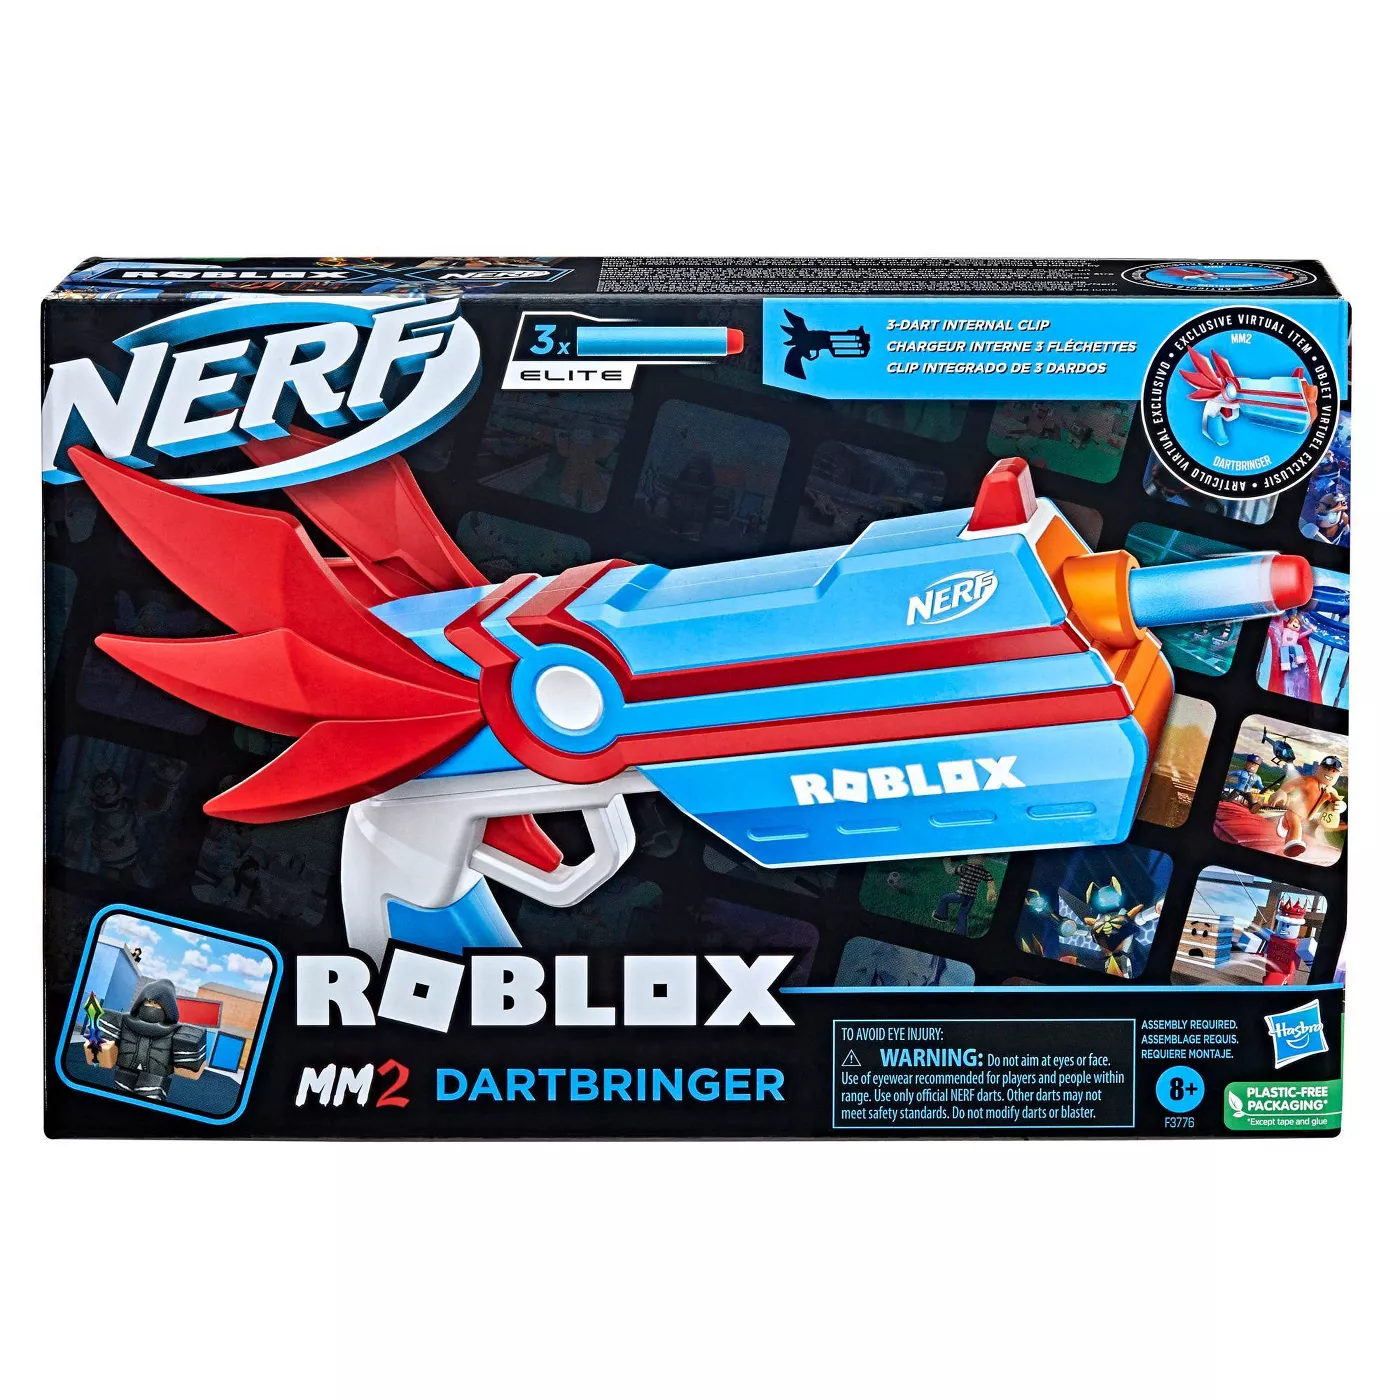 Nerf Roblox Phantom Forces: Boxy Buster Dart Blaster, 2 Nerf Elite Darts,  Code To Unlock In-Game Virtual Item - Nerf